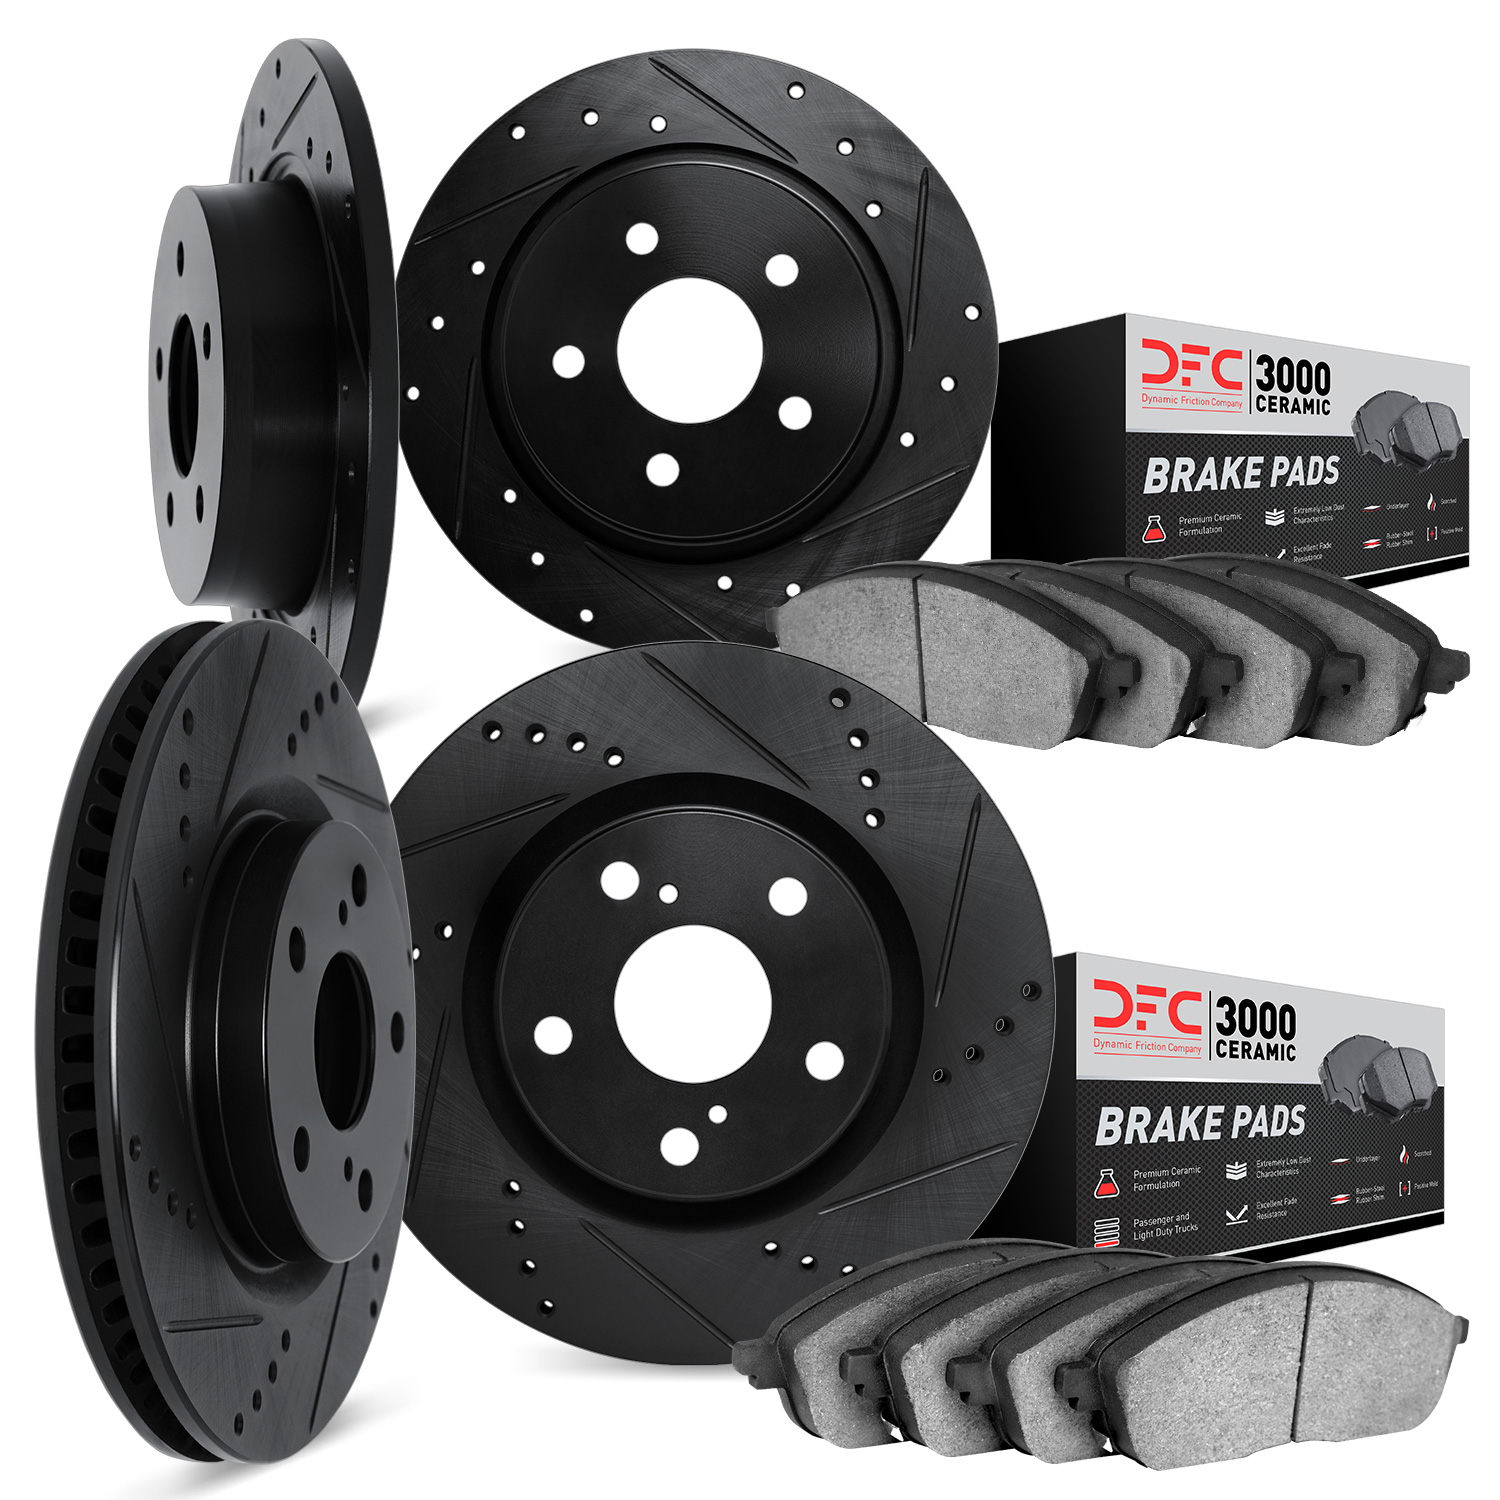 8304-39013 Drilled/Slotted Brake Rotors with 3000-Series Ceramic Brake Pads Kit [Black], 2007-2016 Multiple Makes/Models, Positi